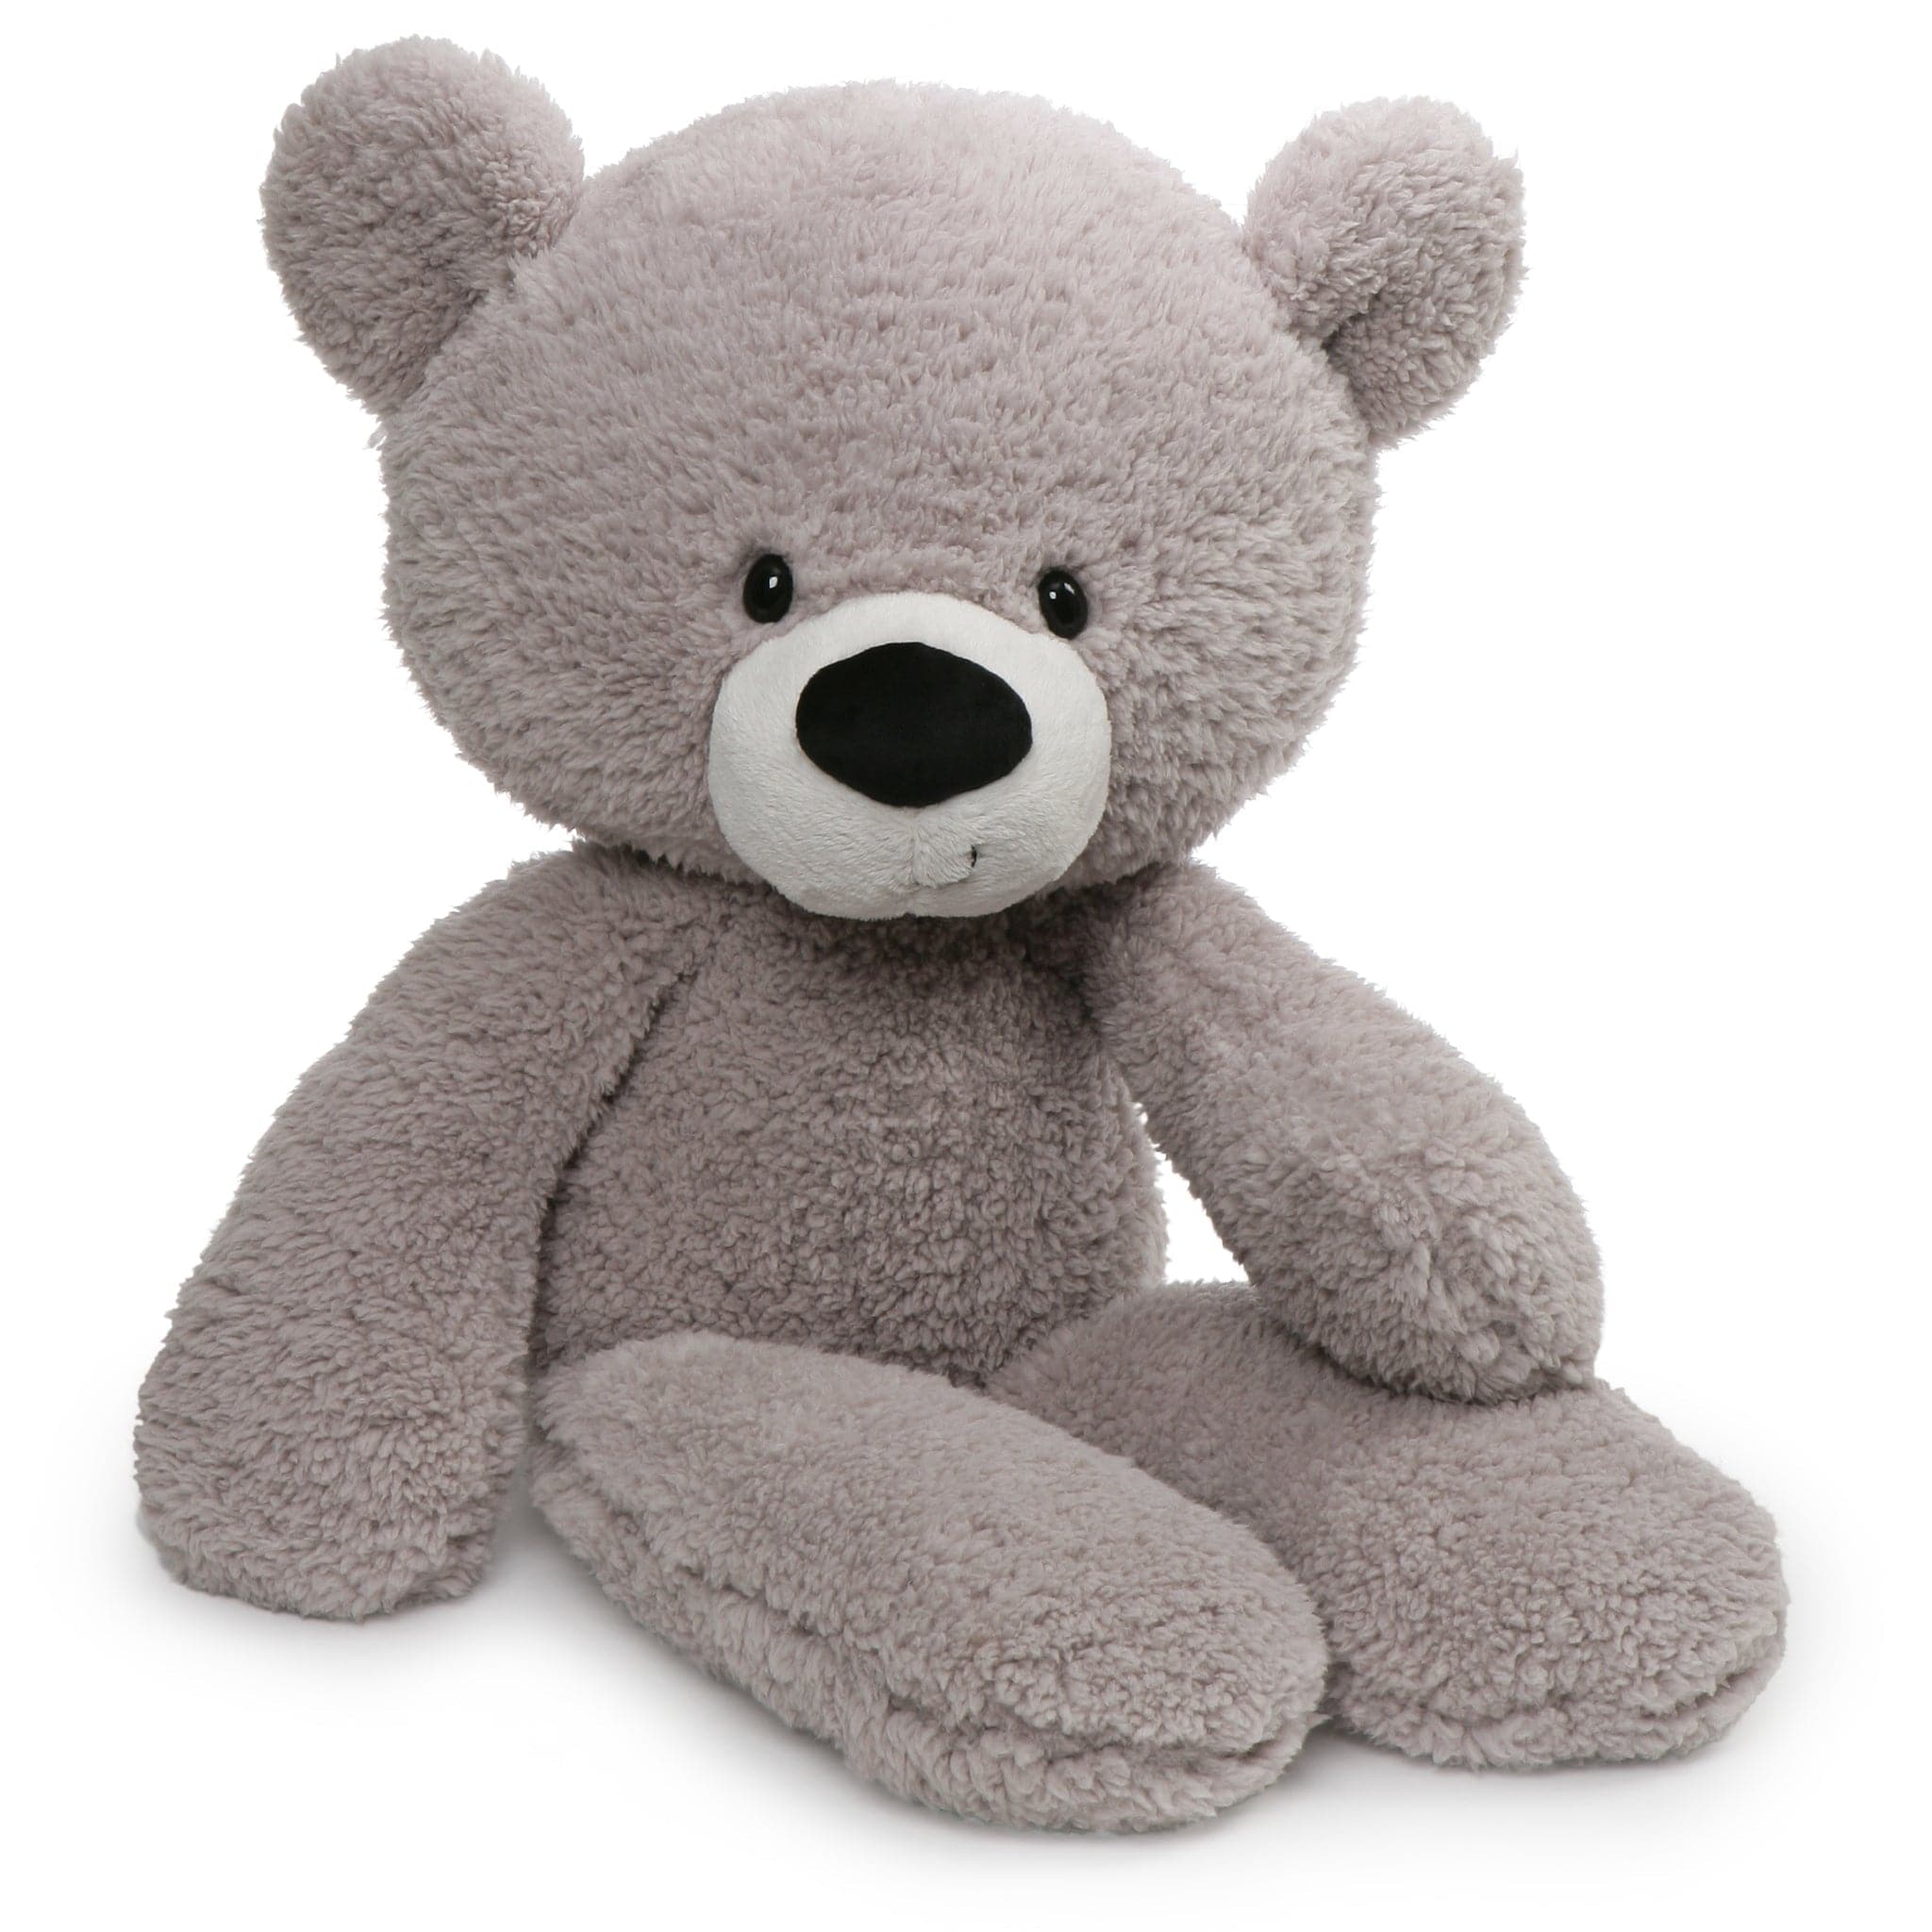 Gund-Fuzzy Teddy Bear - Gray-6049972-13.5